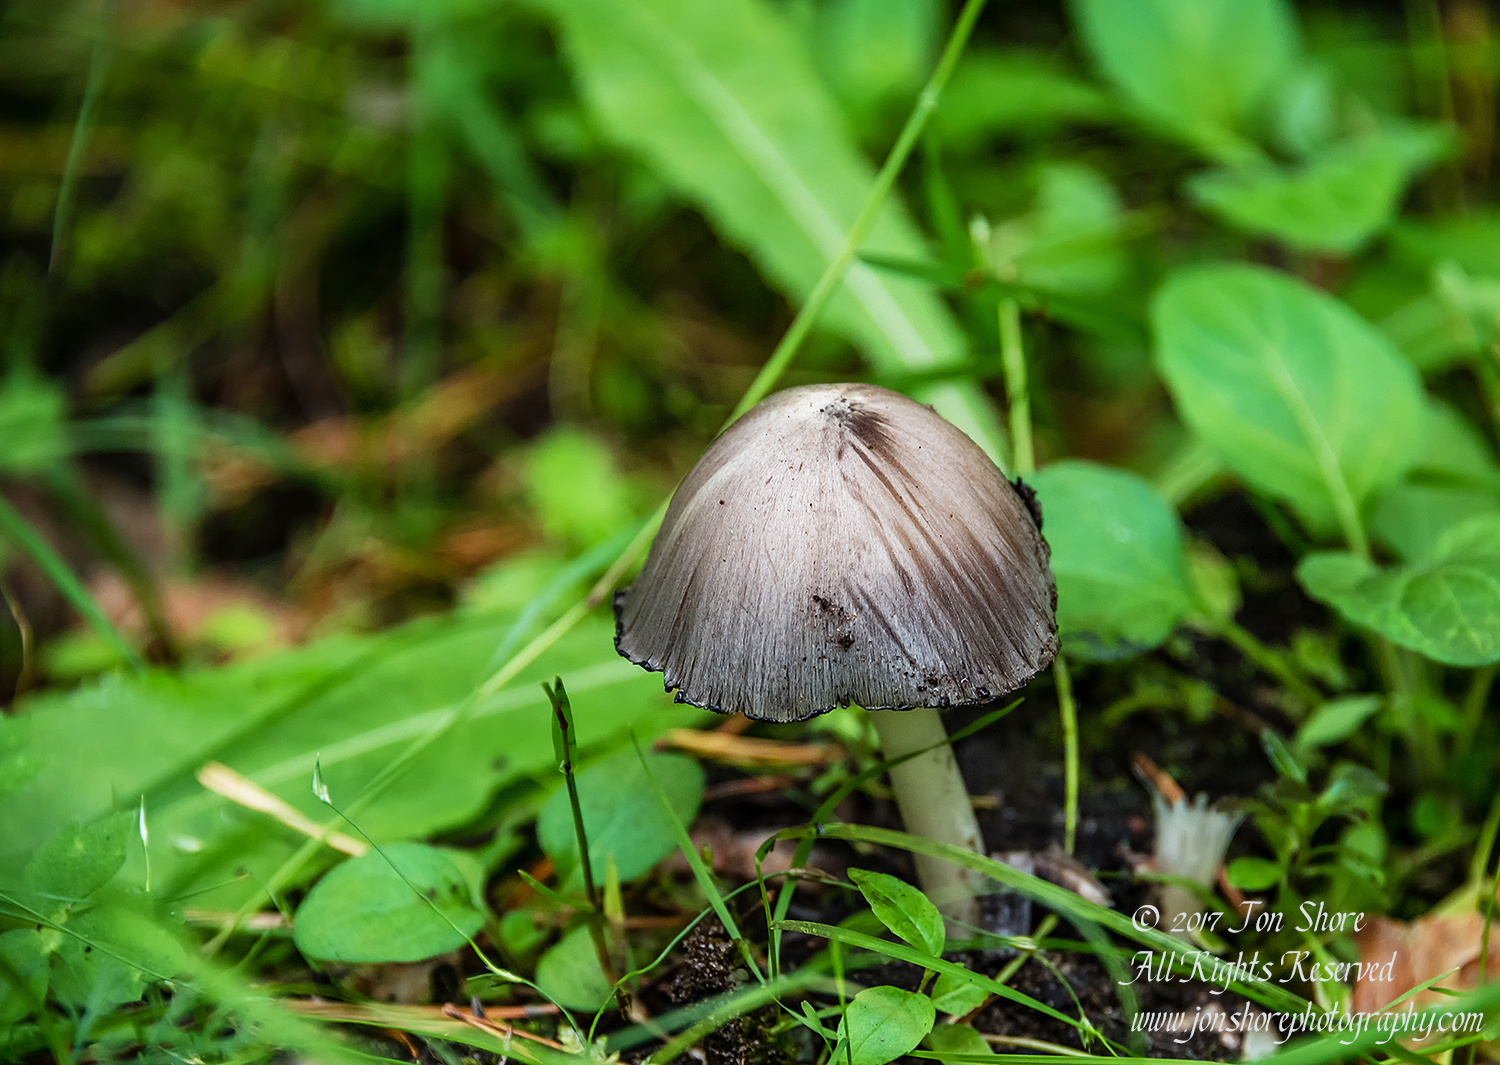 Mushroom Latvia September 2017 by Jon Shore